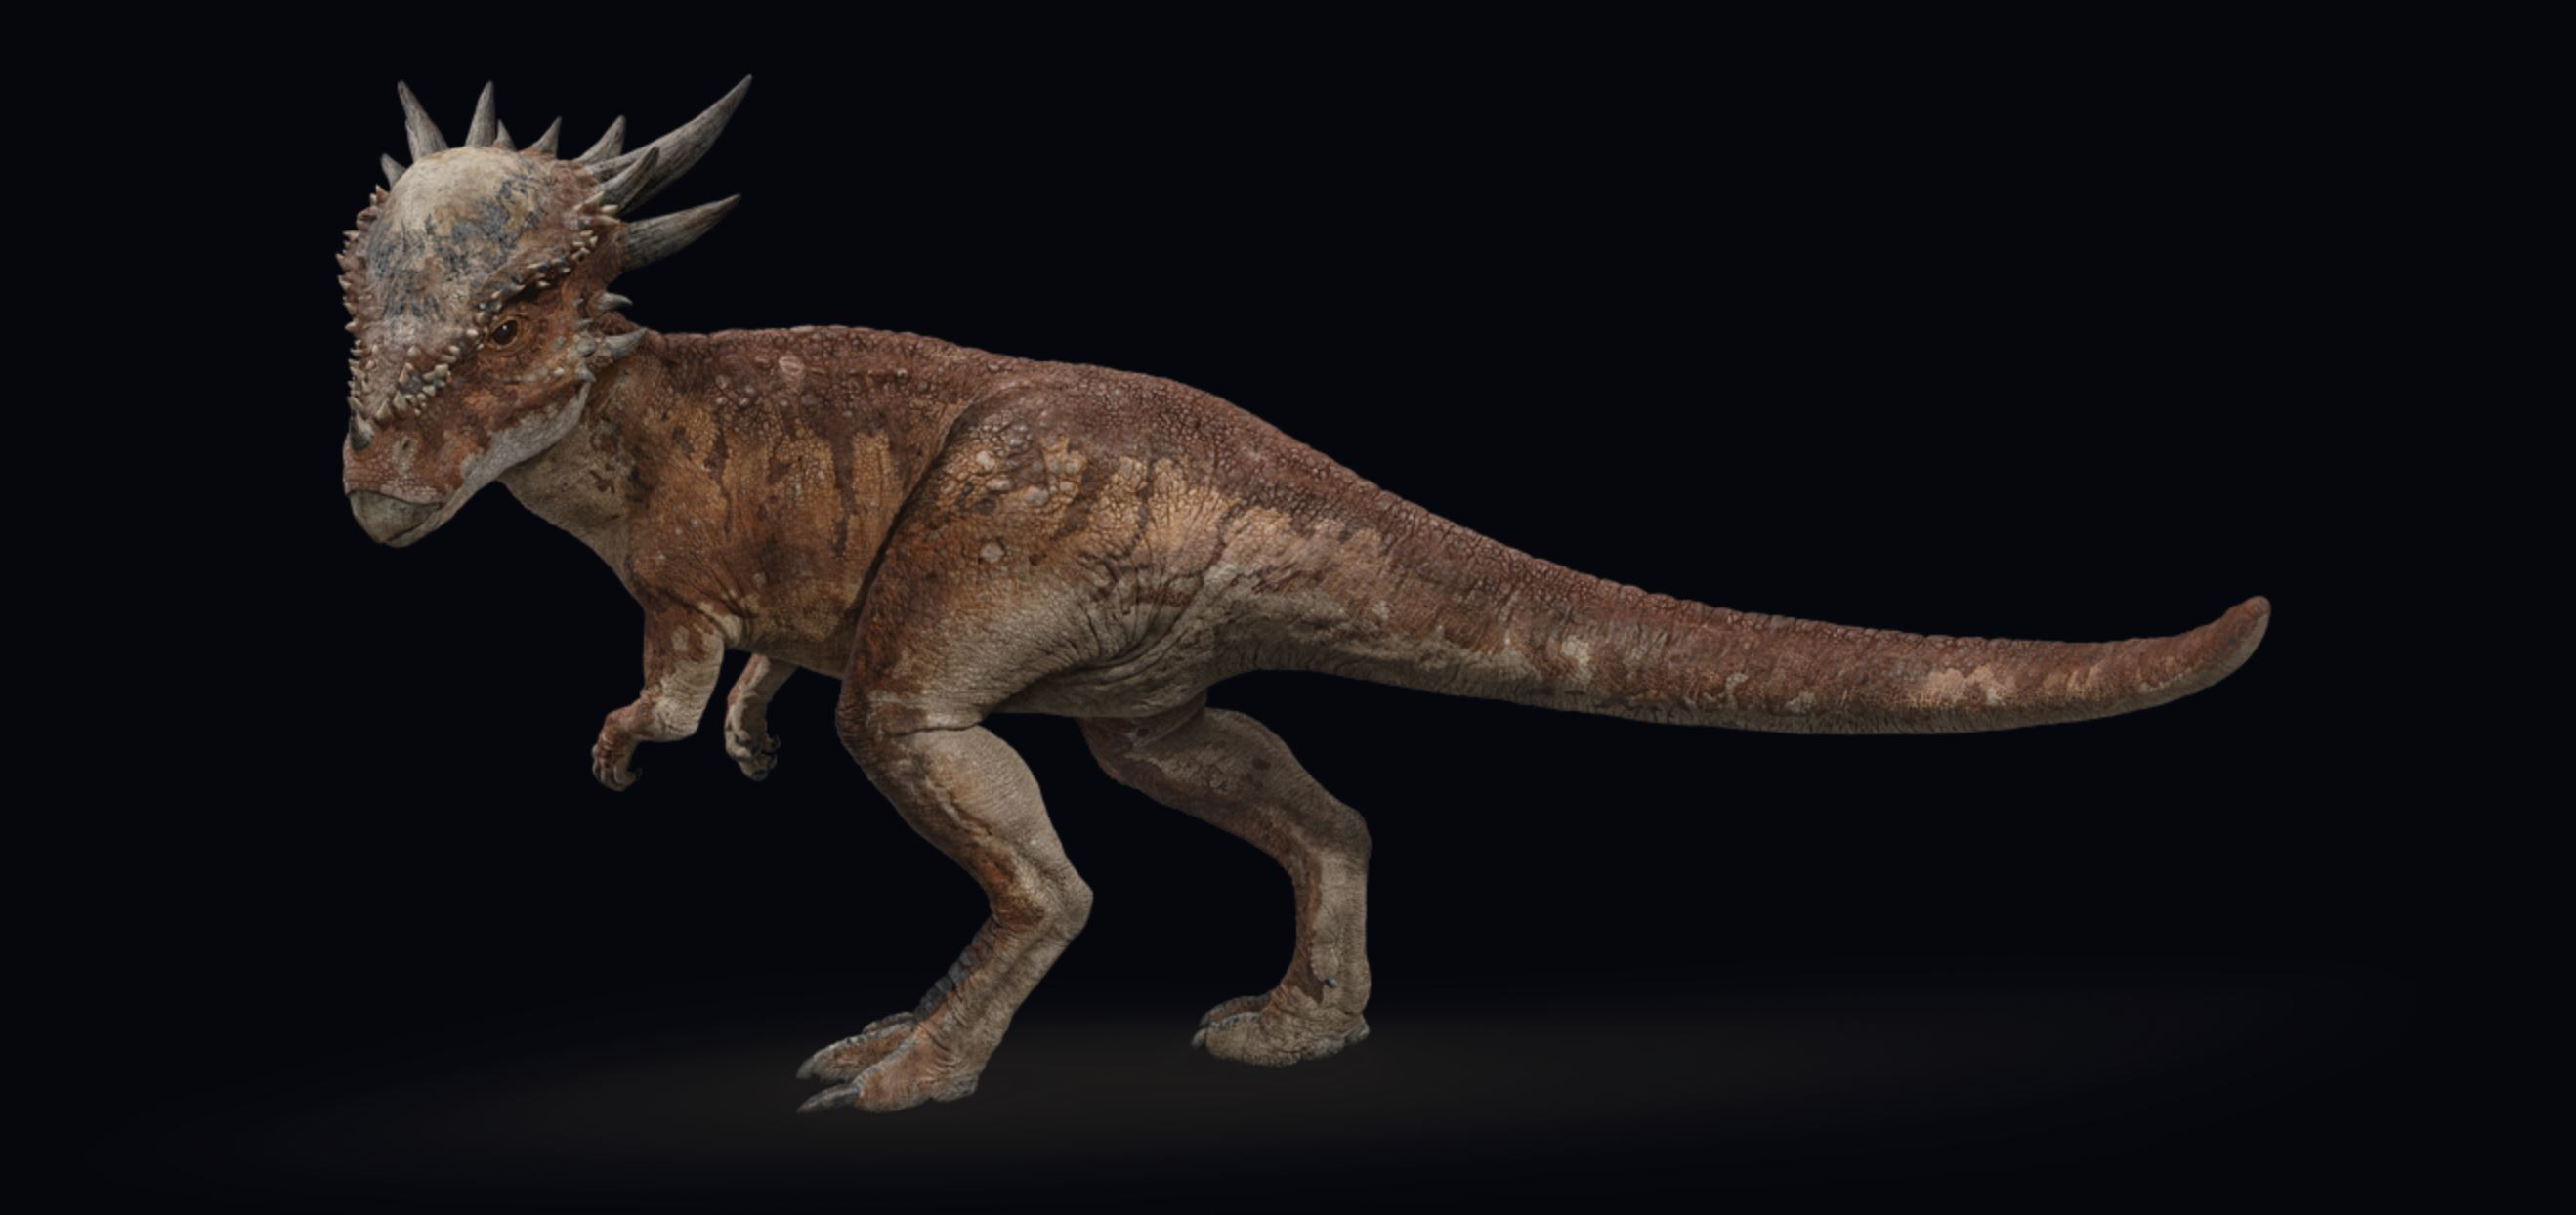 Stygimoloch marketing images( found in the net)